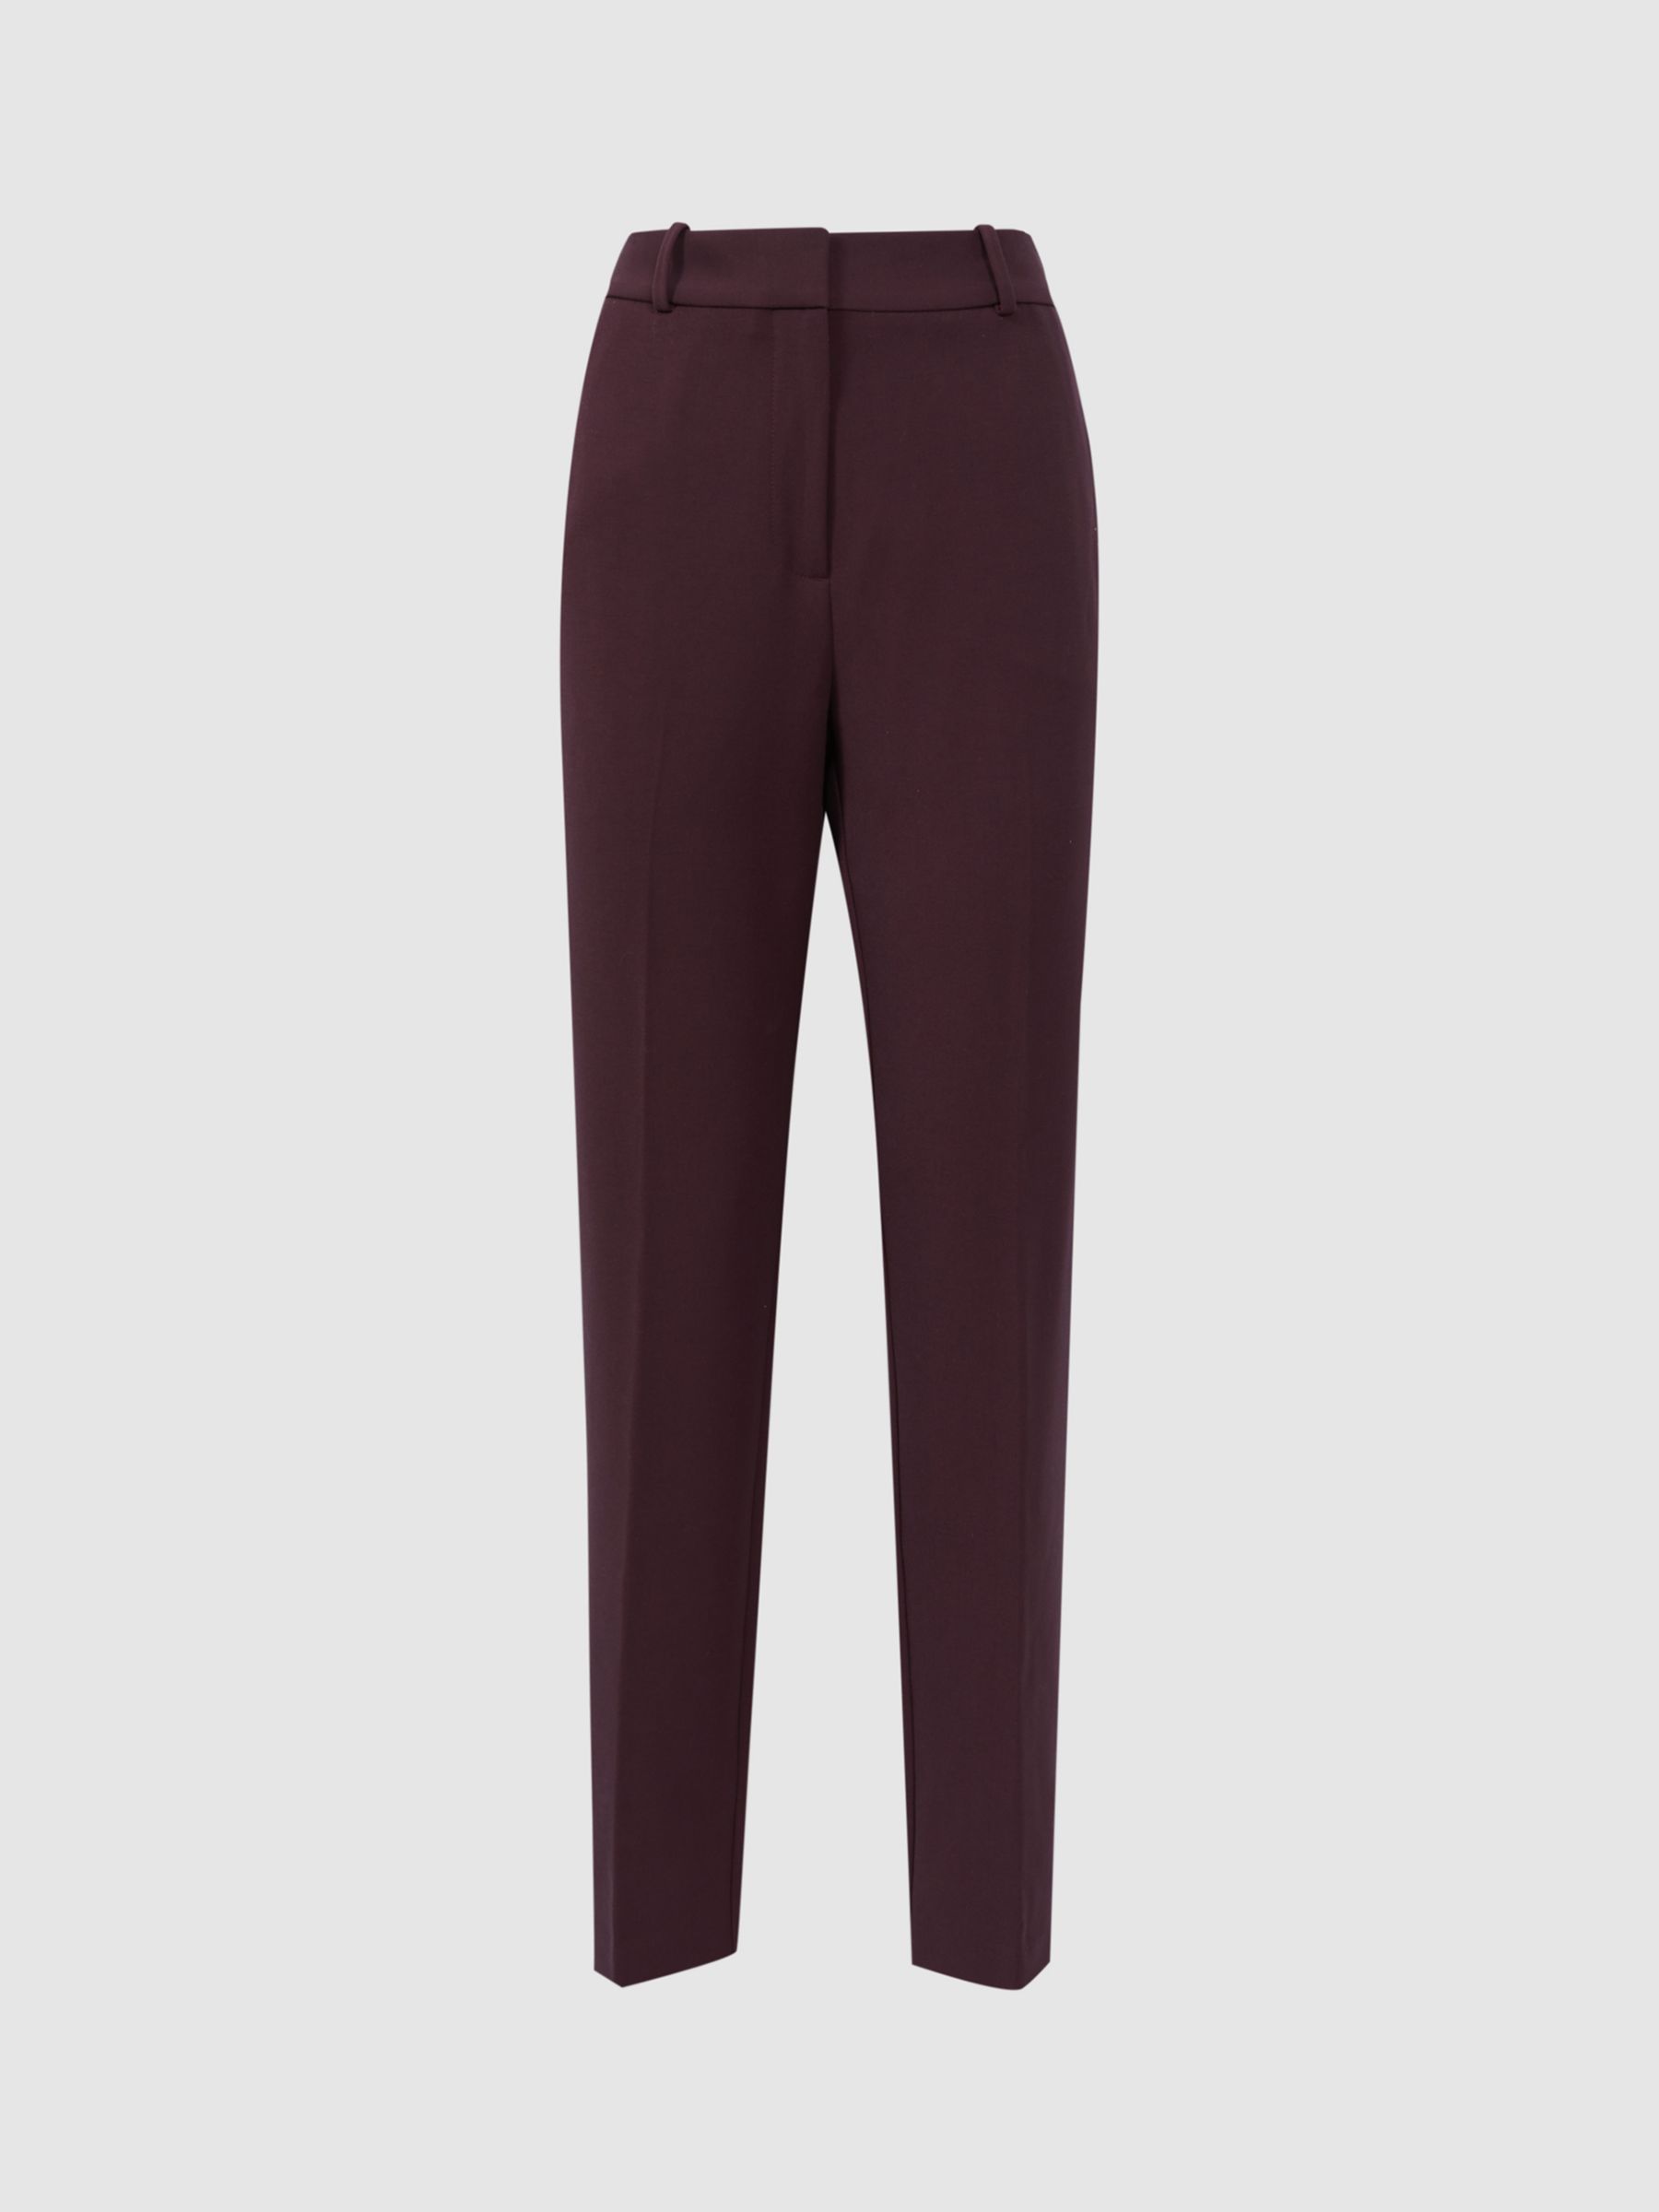 Reiss Gabi Slim Fit Tailored Suit Trousers, Berry, 12